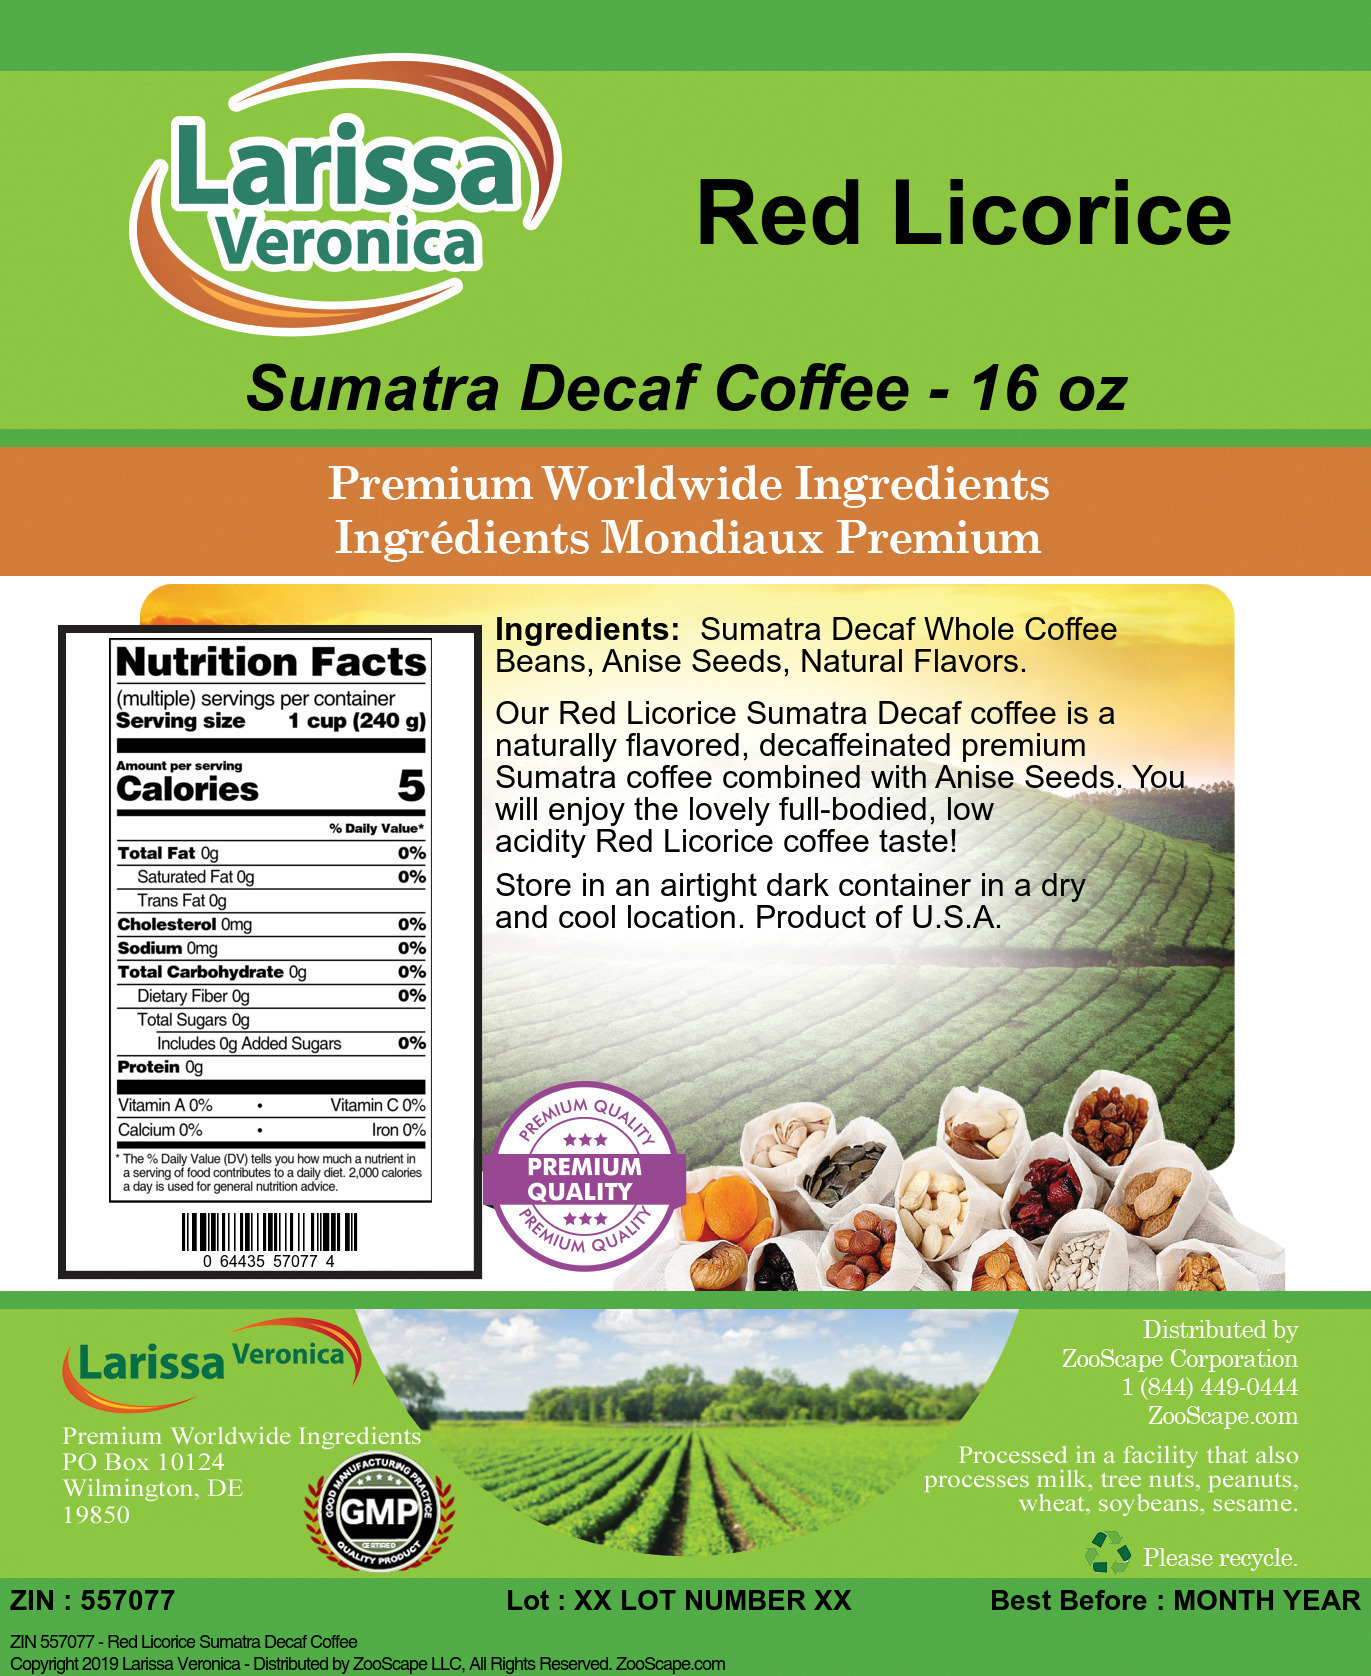 Red Licorice Sumatra Decaf Coffee - Label